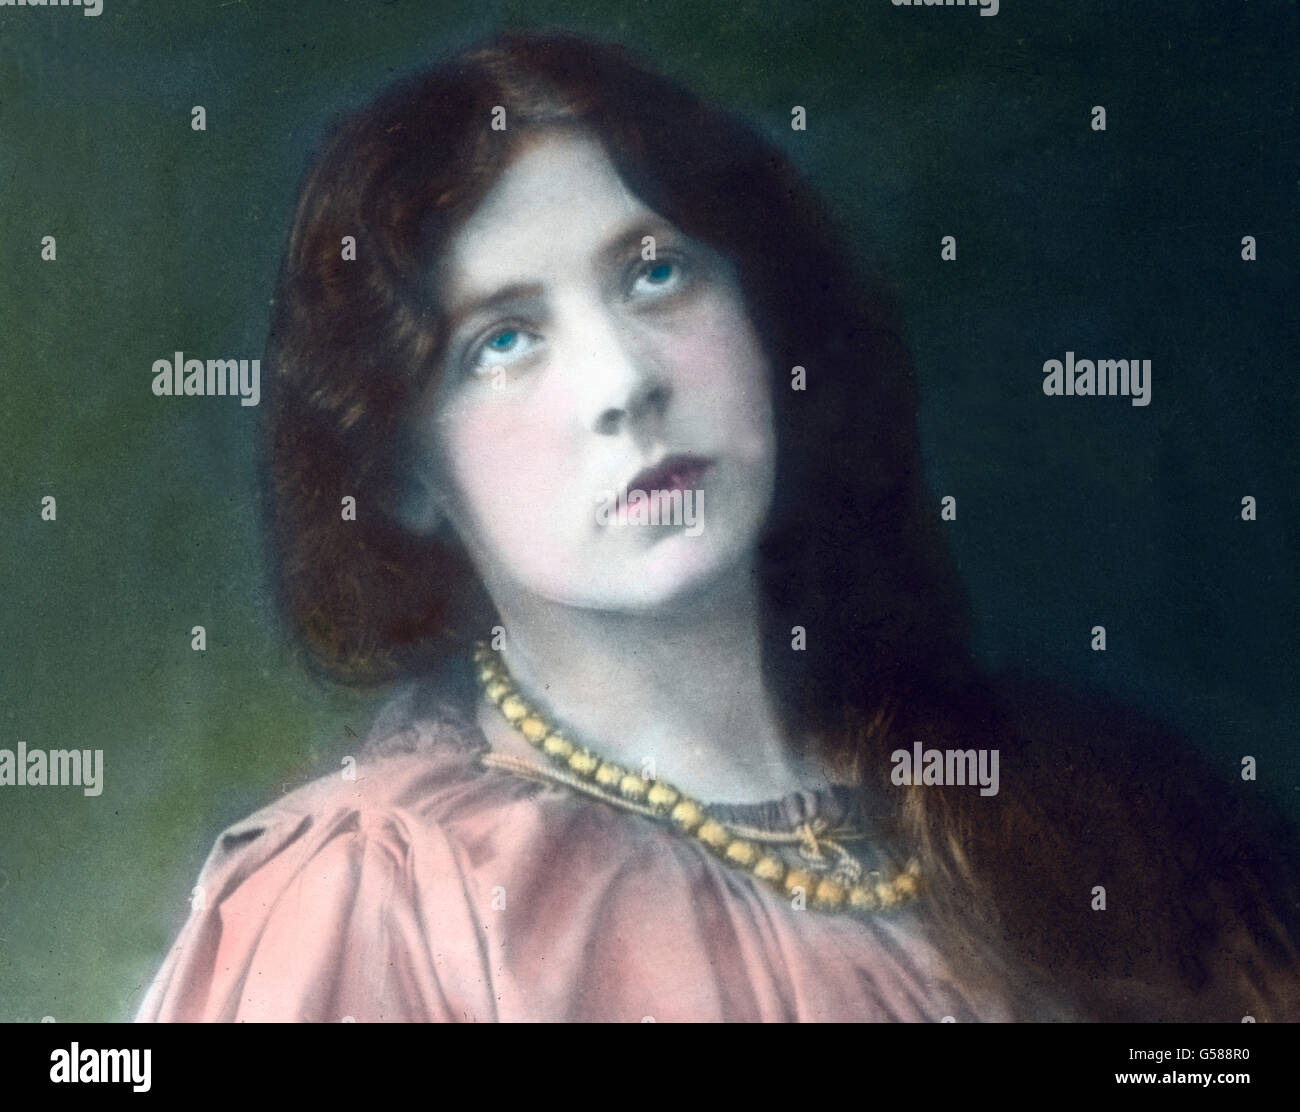 Mary magdalena fotografías e imágenes de alta resolución - Alamy